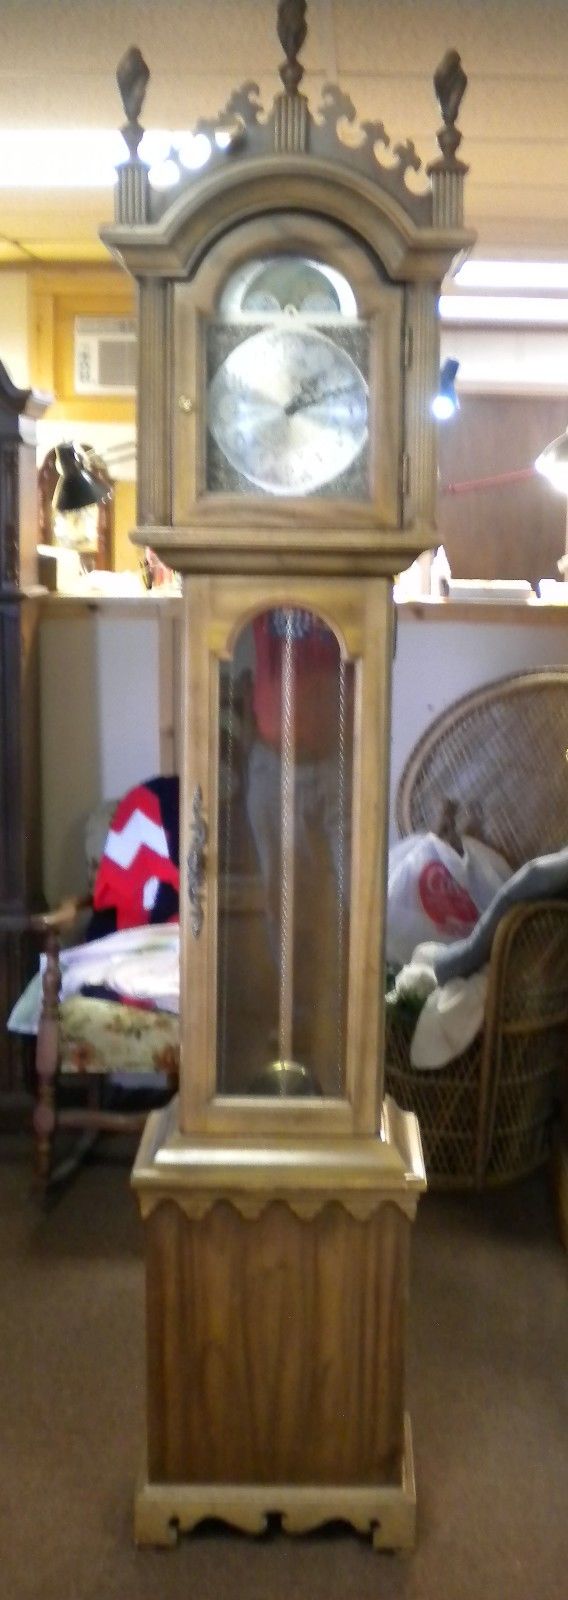 Used Grandfather Clock